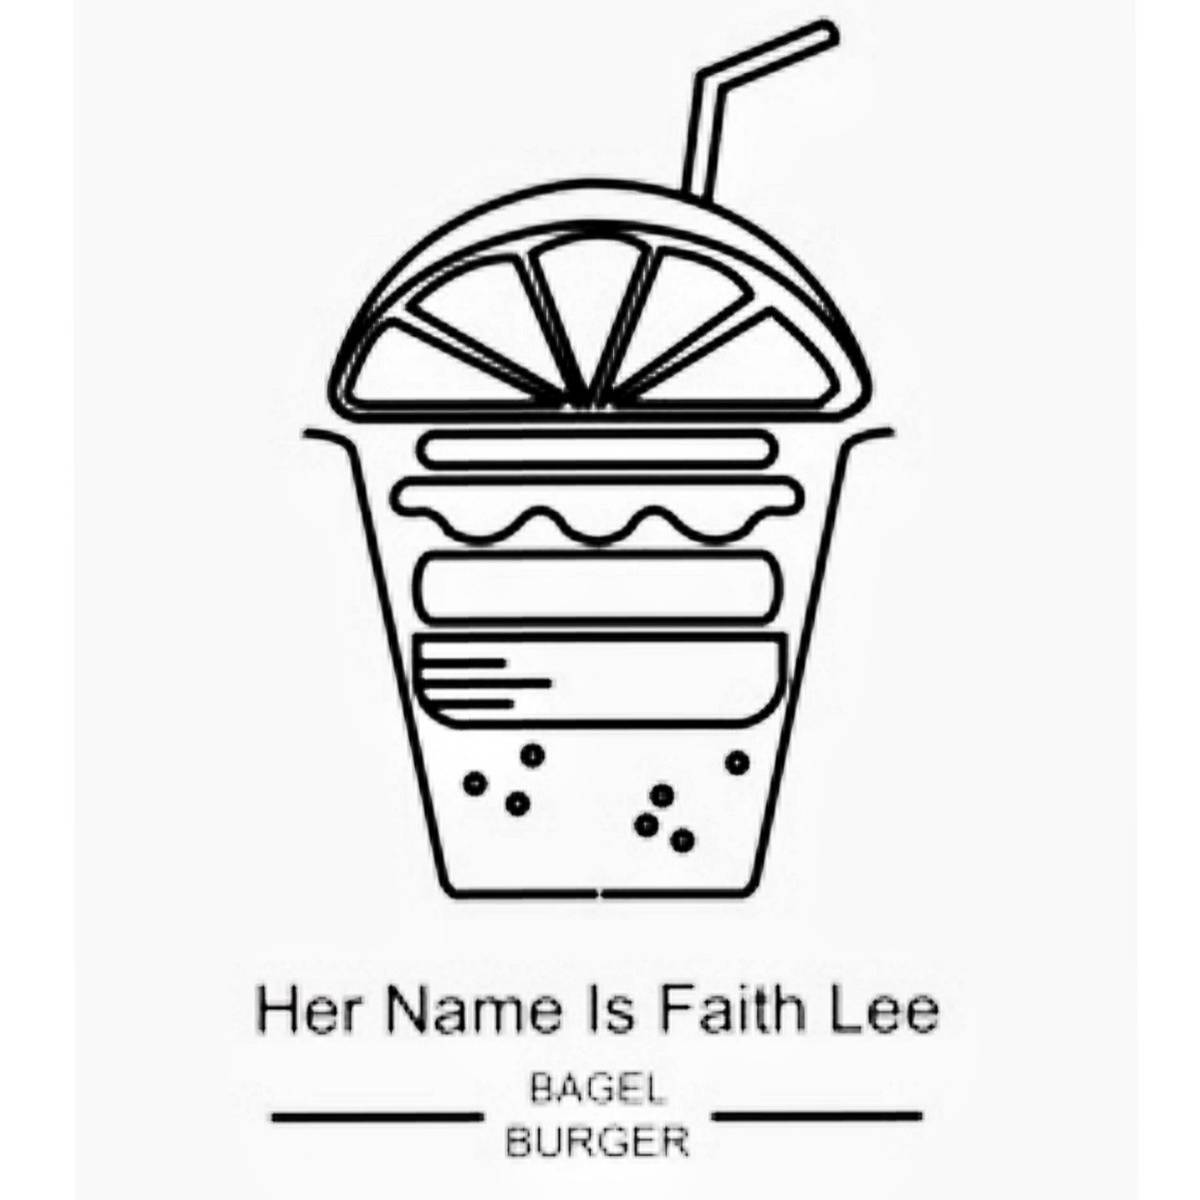 Her name is faith Lee